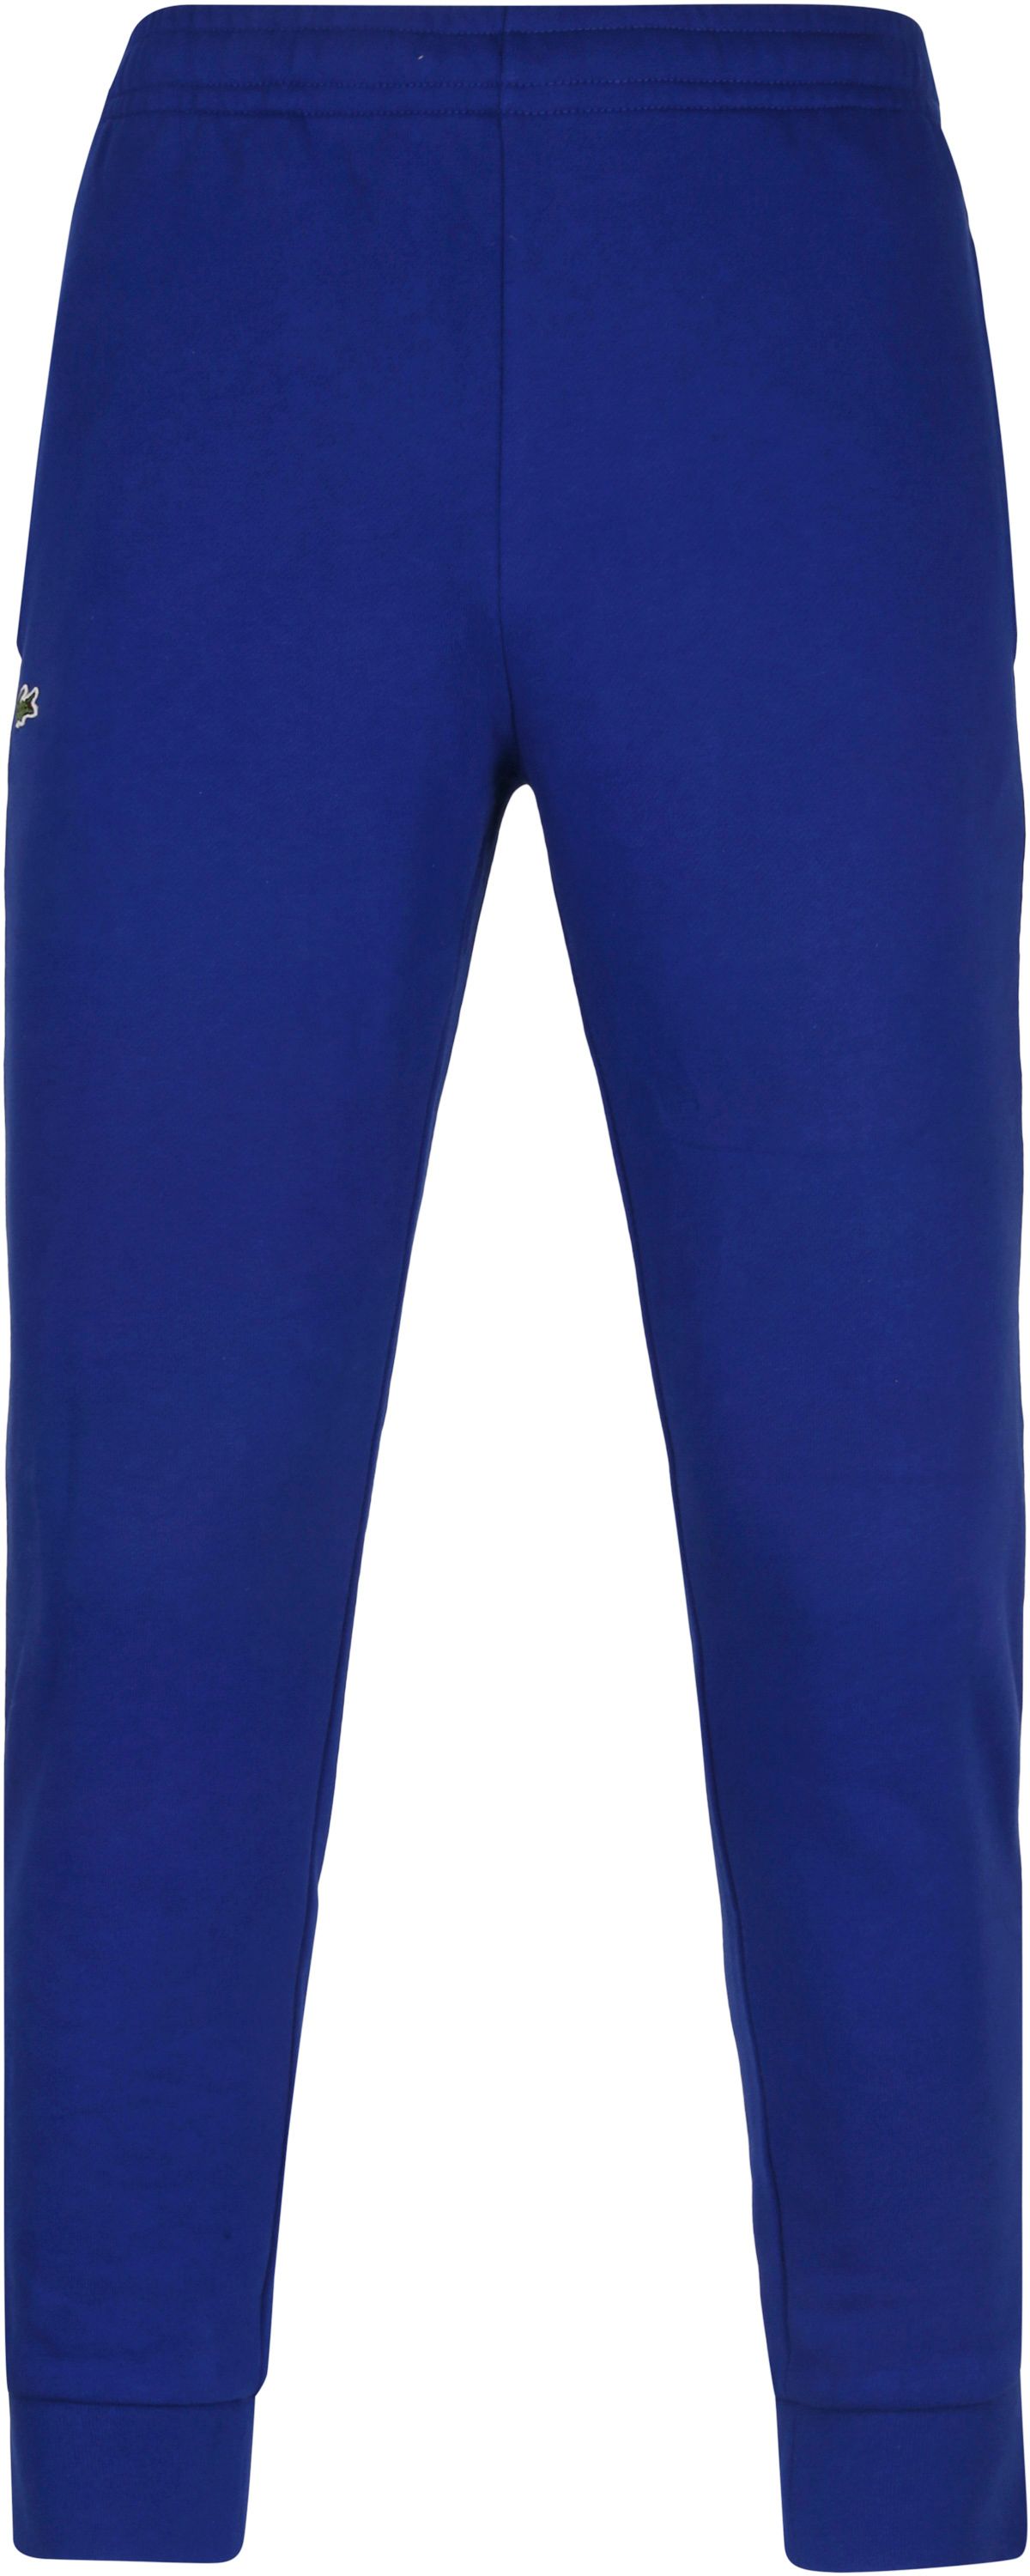 Lacoste Dark Sweatpants Dark Blue Blue size L